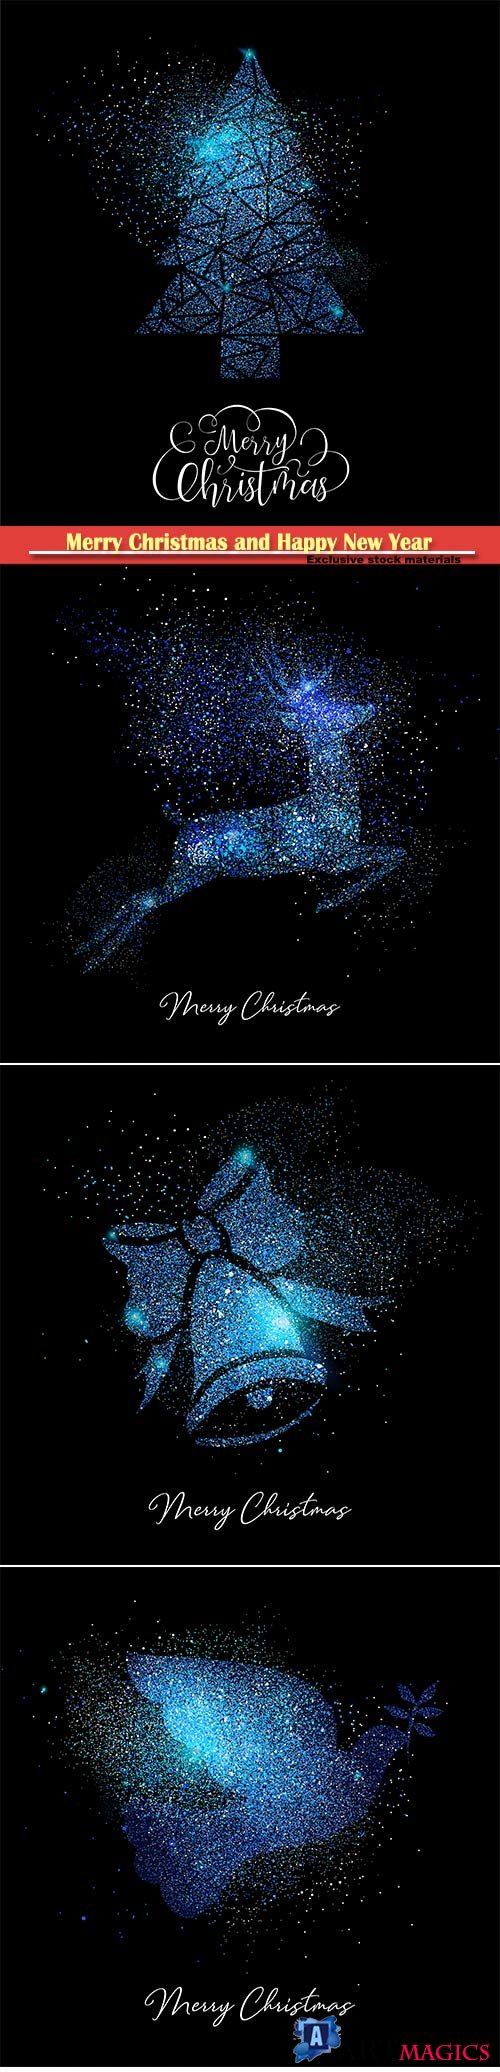 Merry Christmas blue glitter greeting vector card